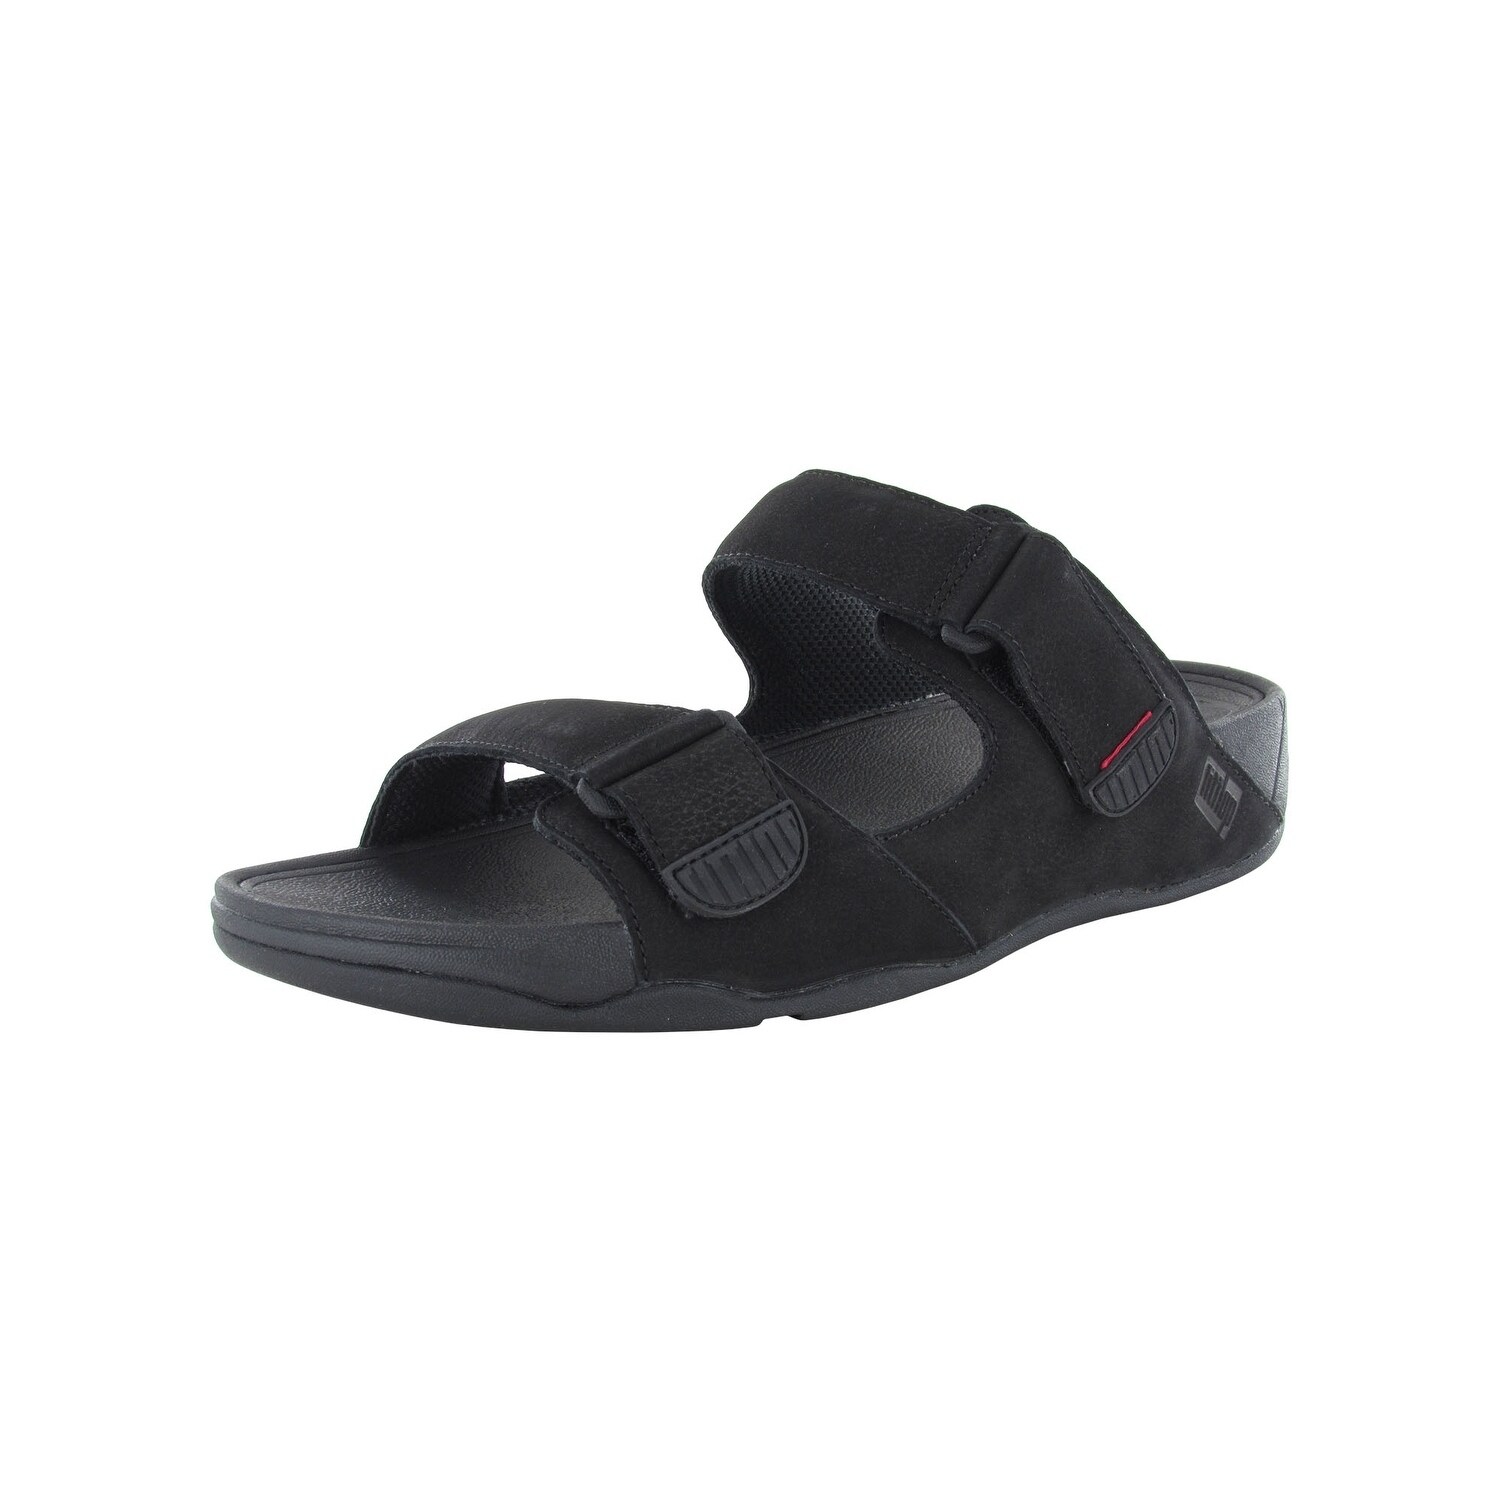 fitflop adjustable sandals